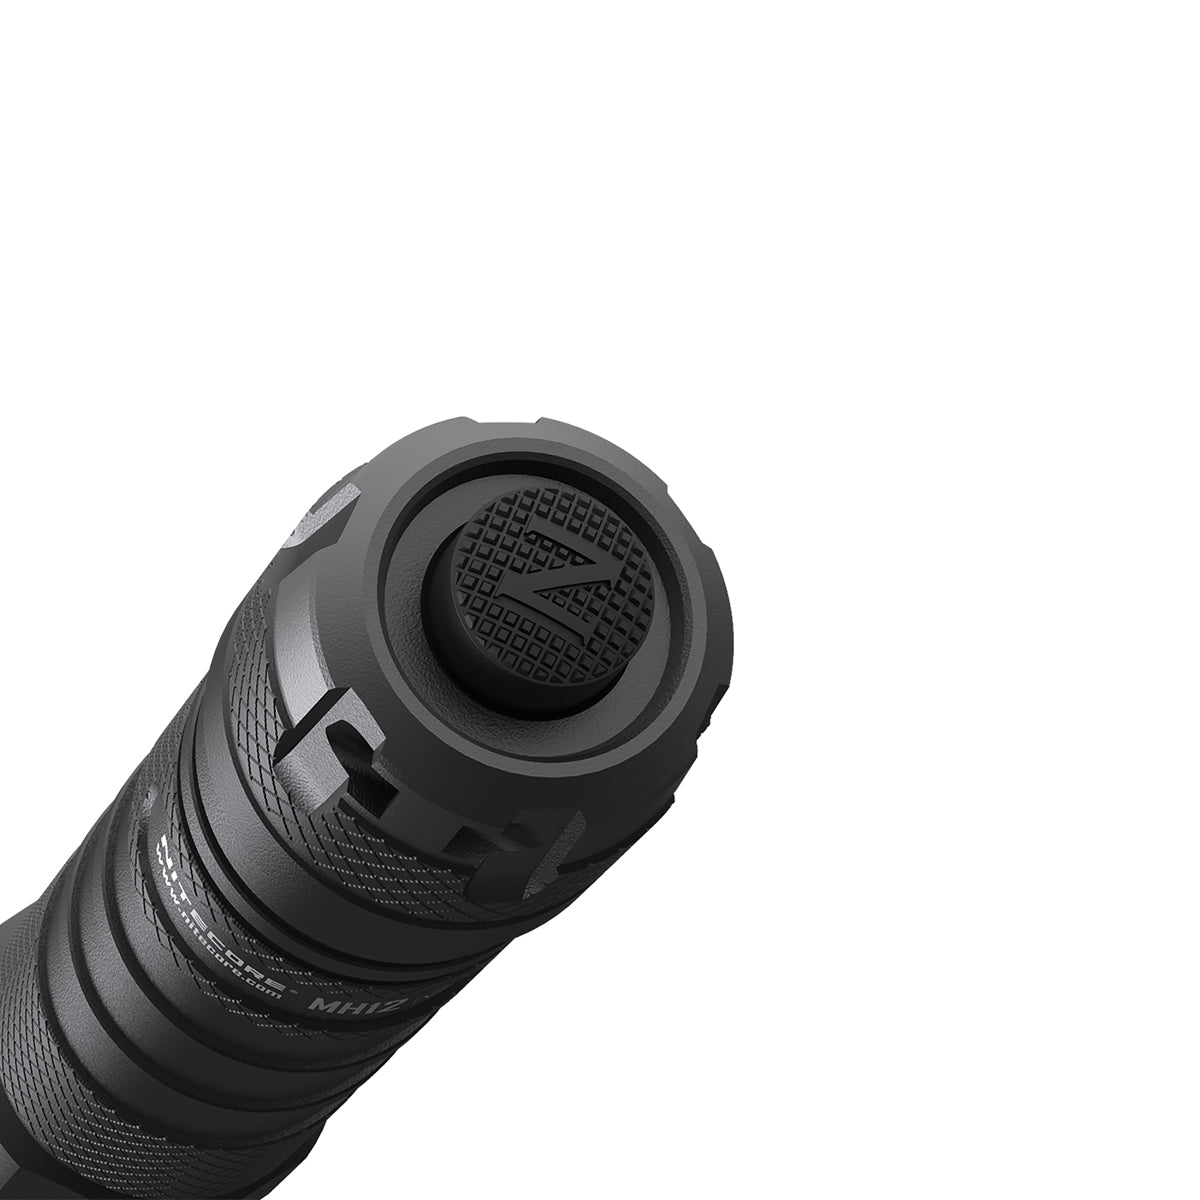 Nitecore Mh12 V2 1200 Lumen Usb-C Rechargeable Tactical Flashlight